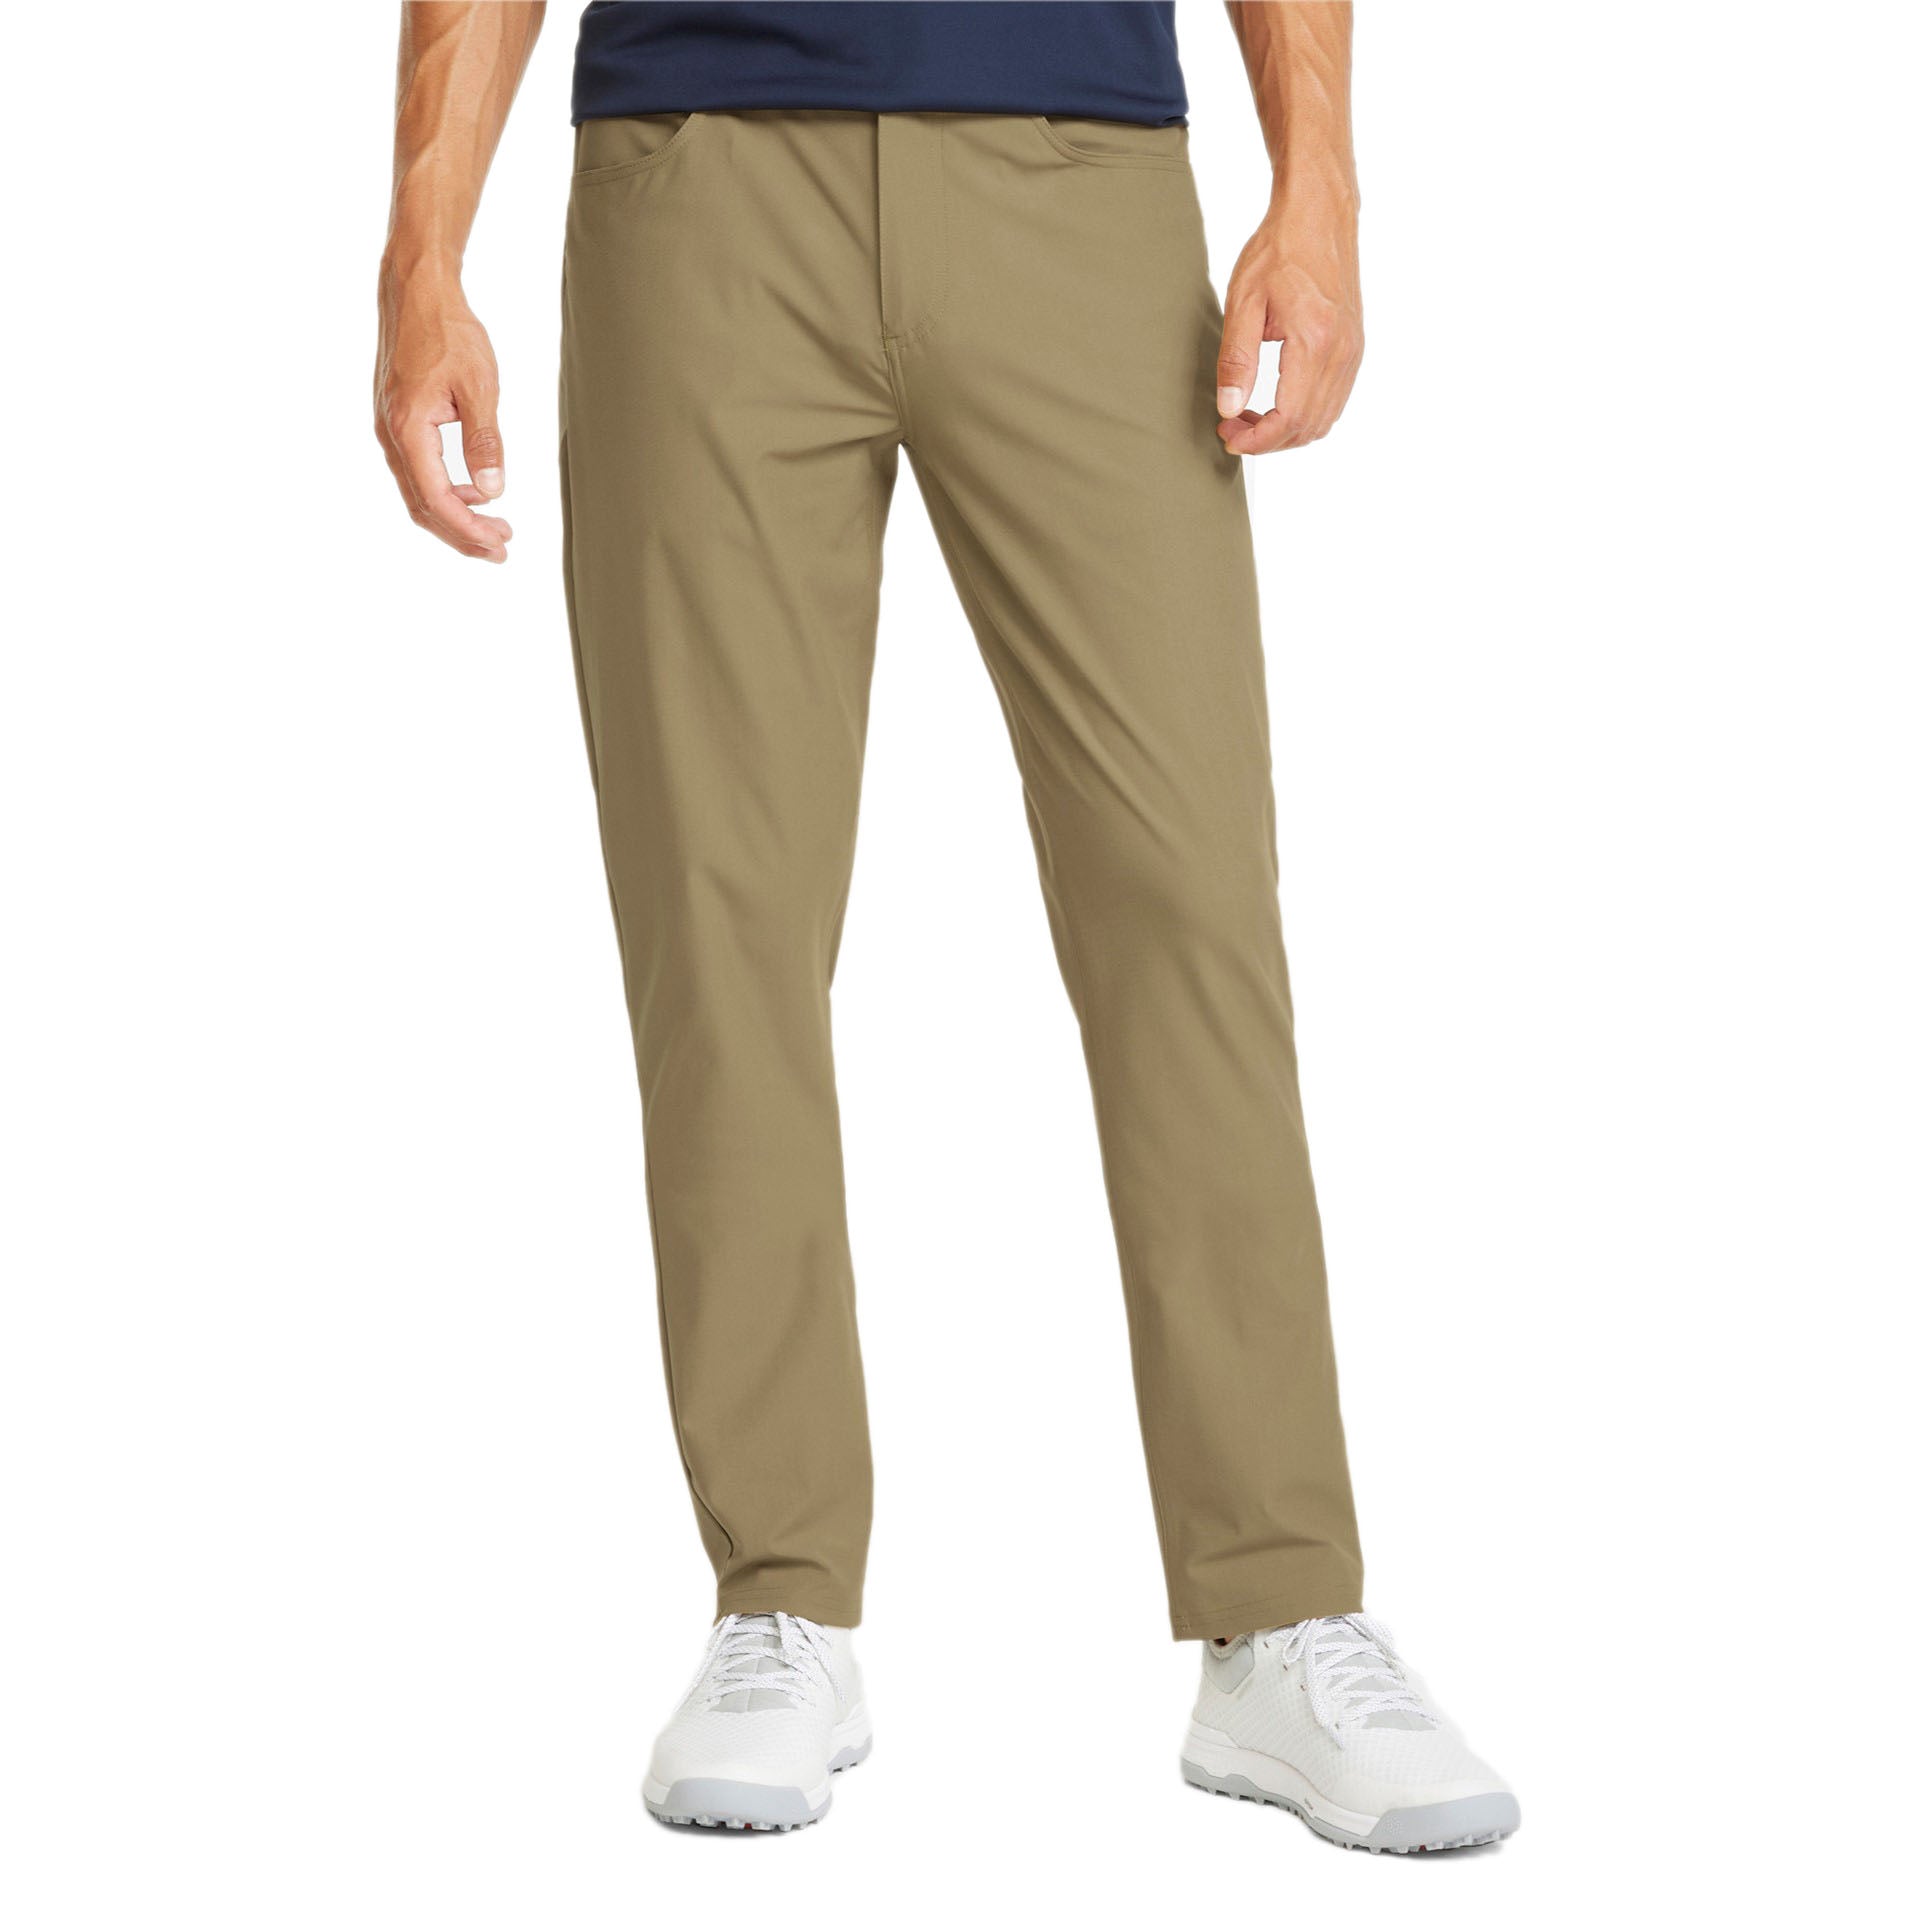 Amazoncom Puma Golf Pants